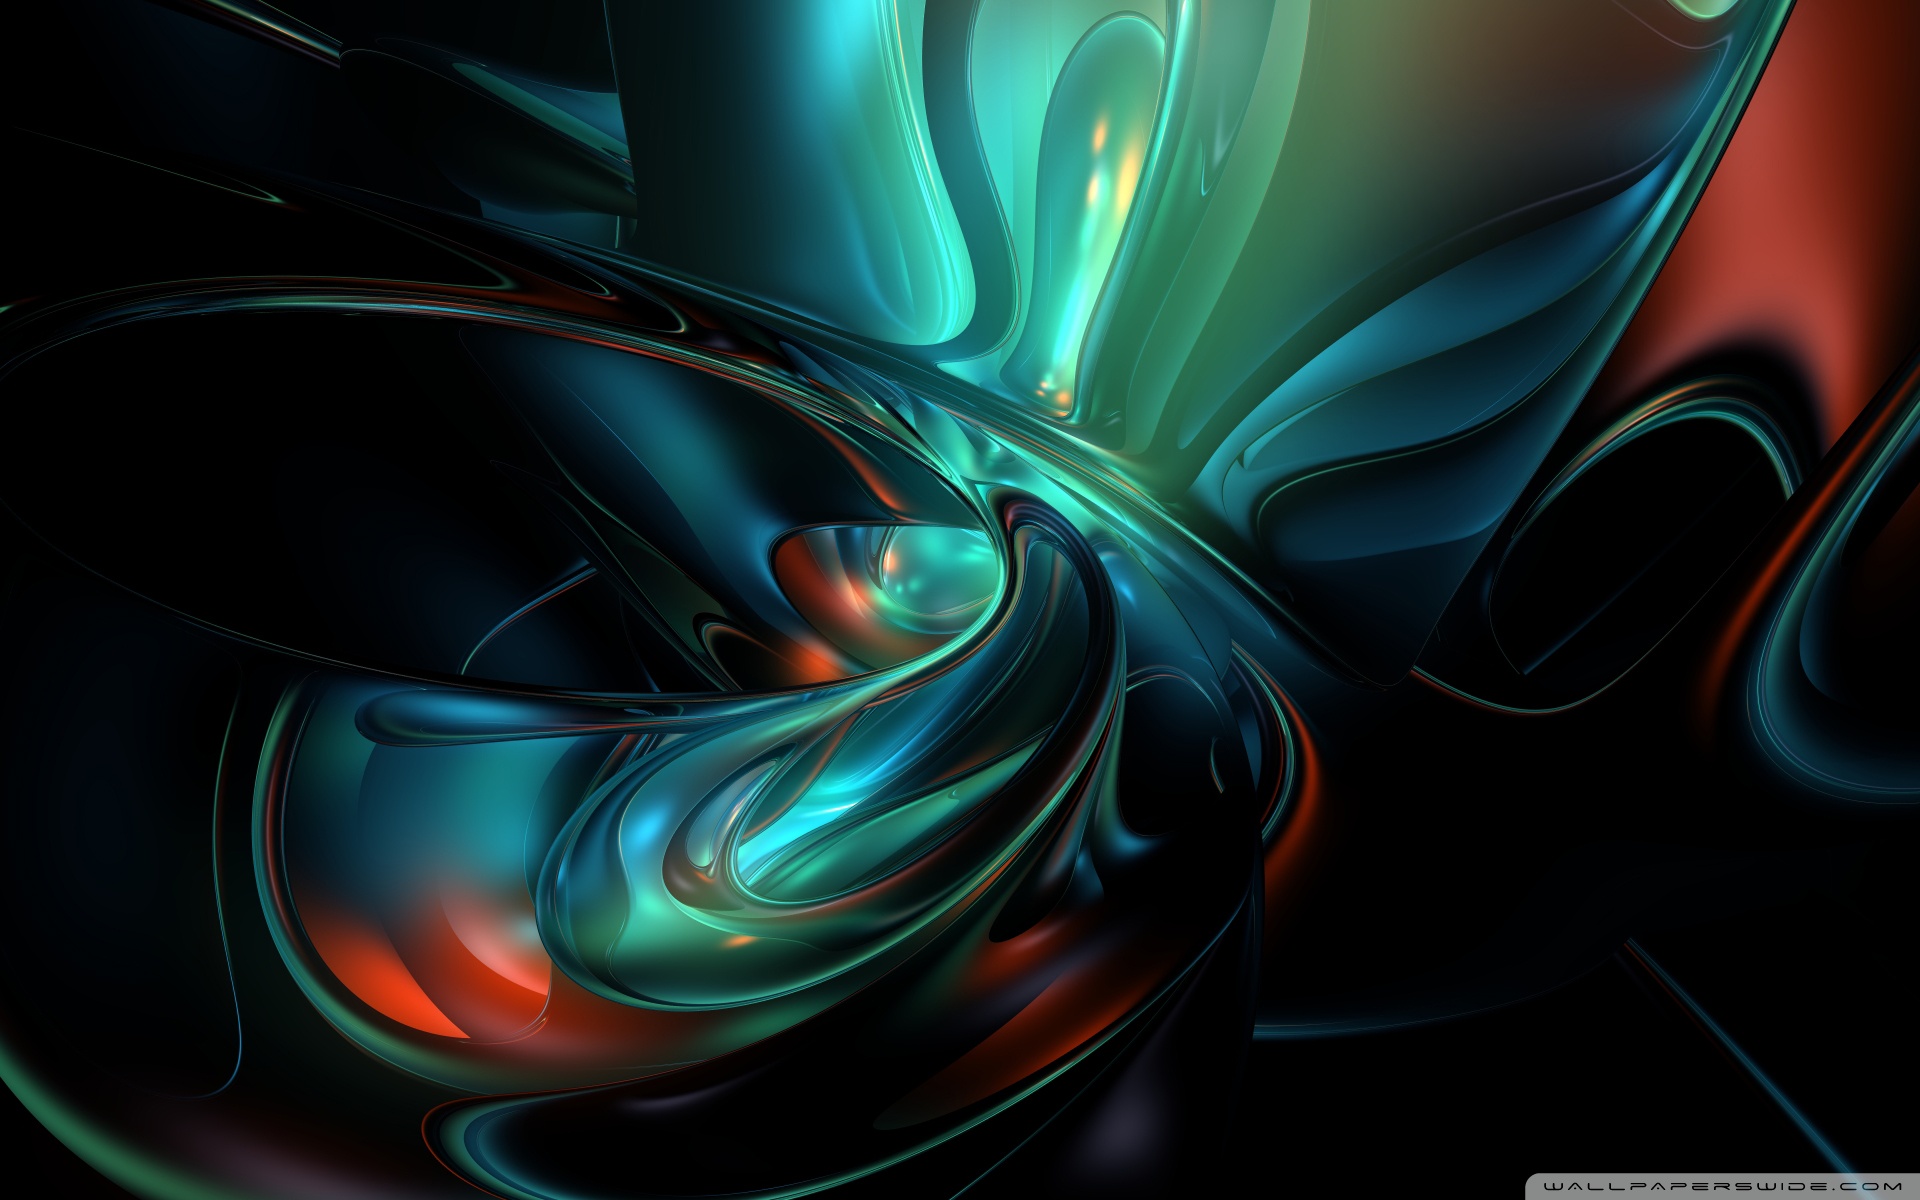 liquid metal Ultra HD Desktop Background Wallpaper for: Widescreen & UltraWide Desktop & Laptop